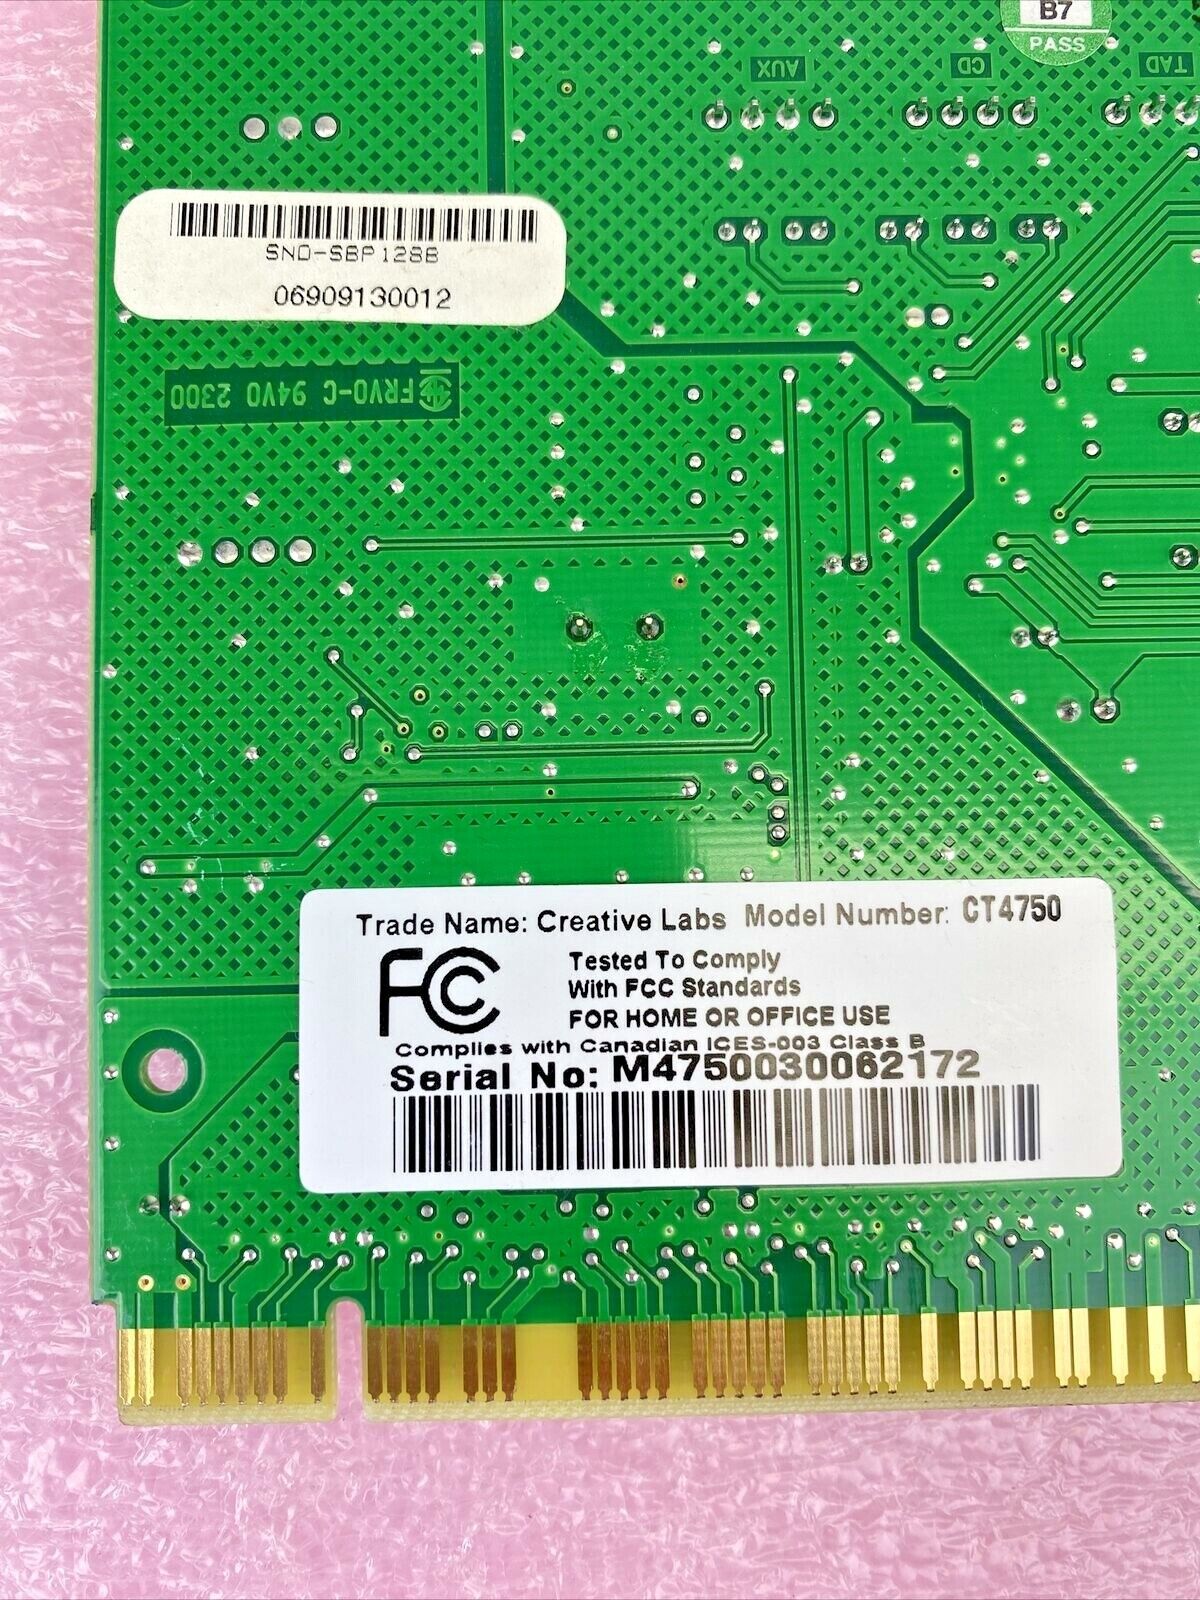 Creative CT4750 Sound Blaster PCI sound card with gameport